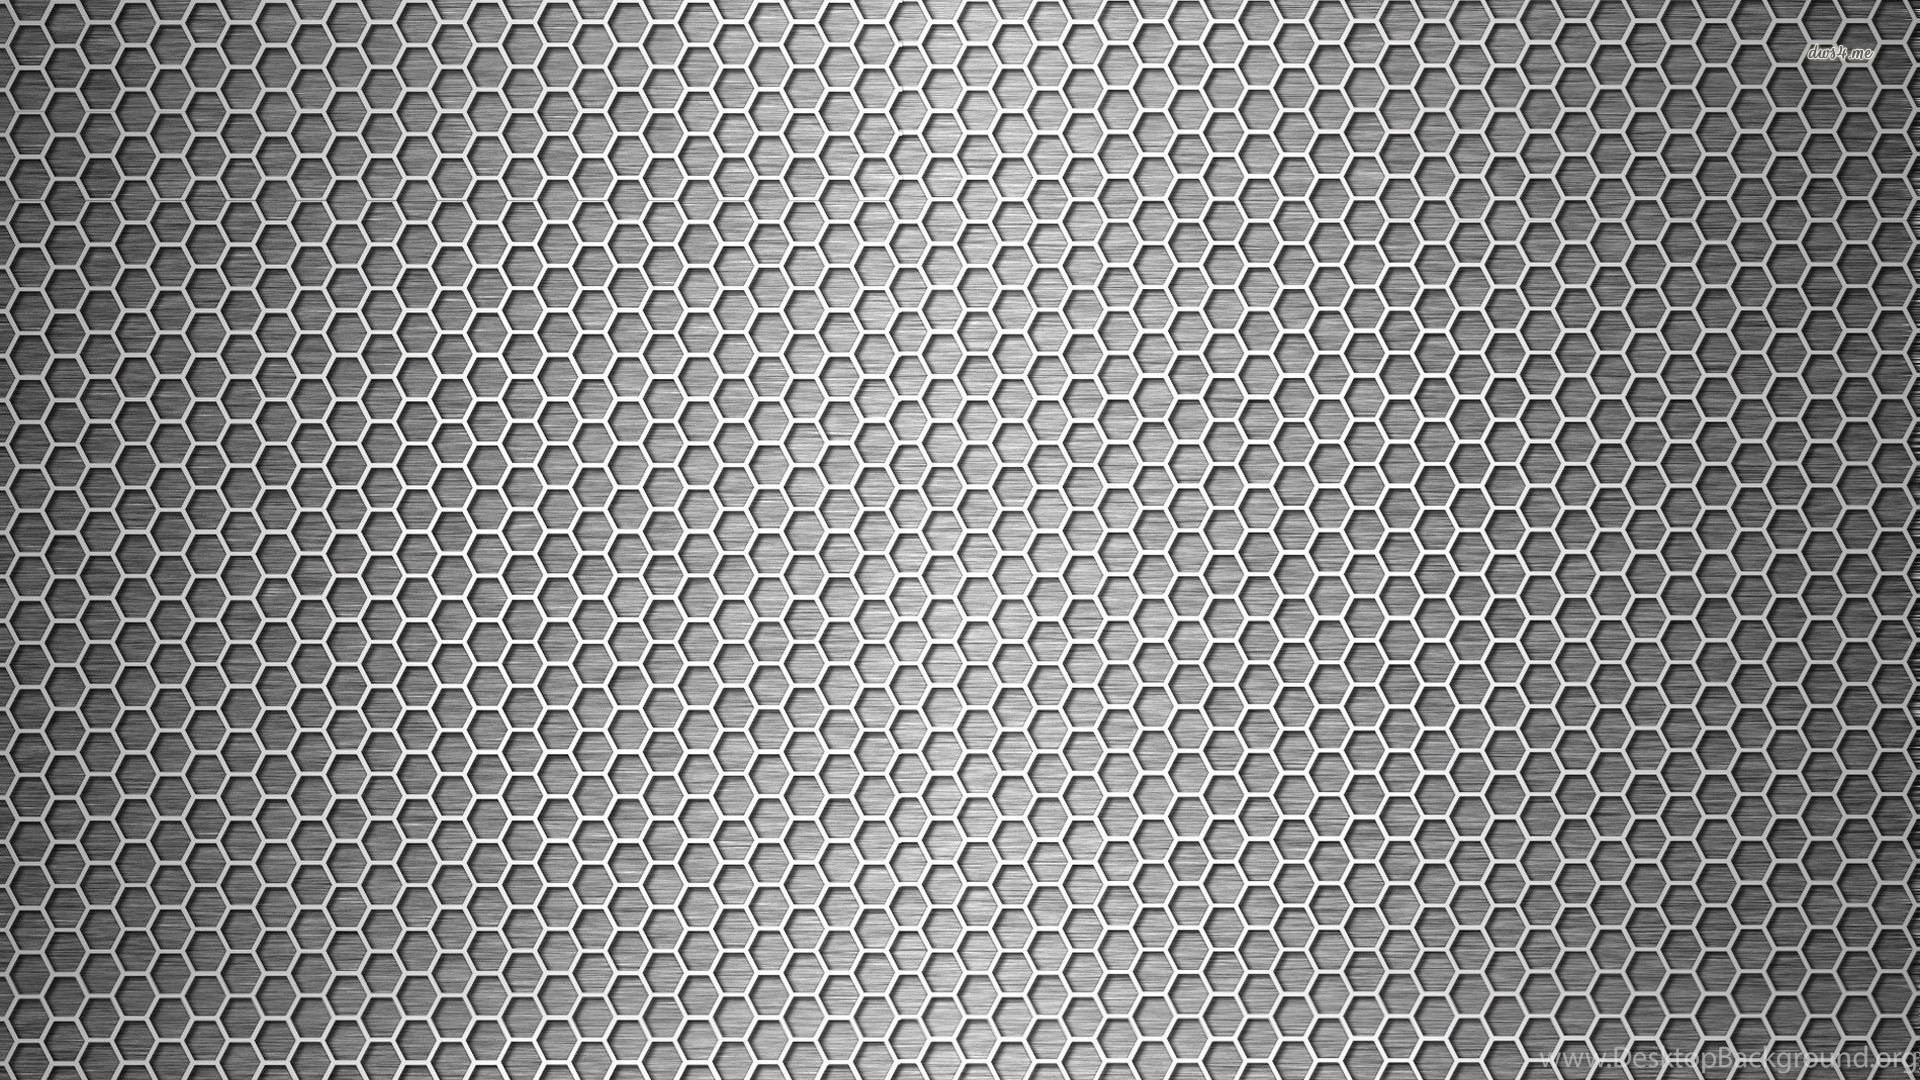 1920x1080 Windows Carbon Fiber Desktop Backgrounds Wallpapers : Abstract .